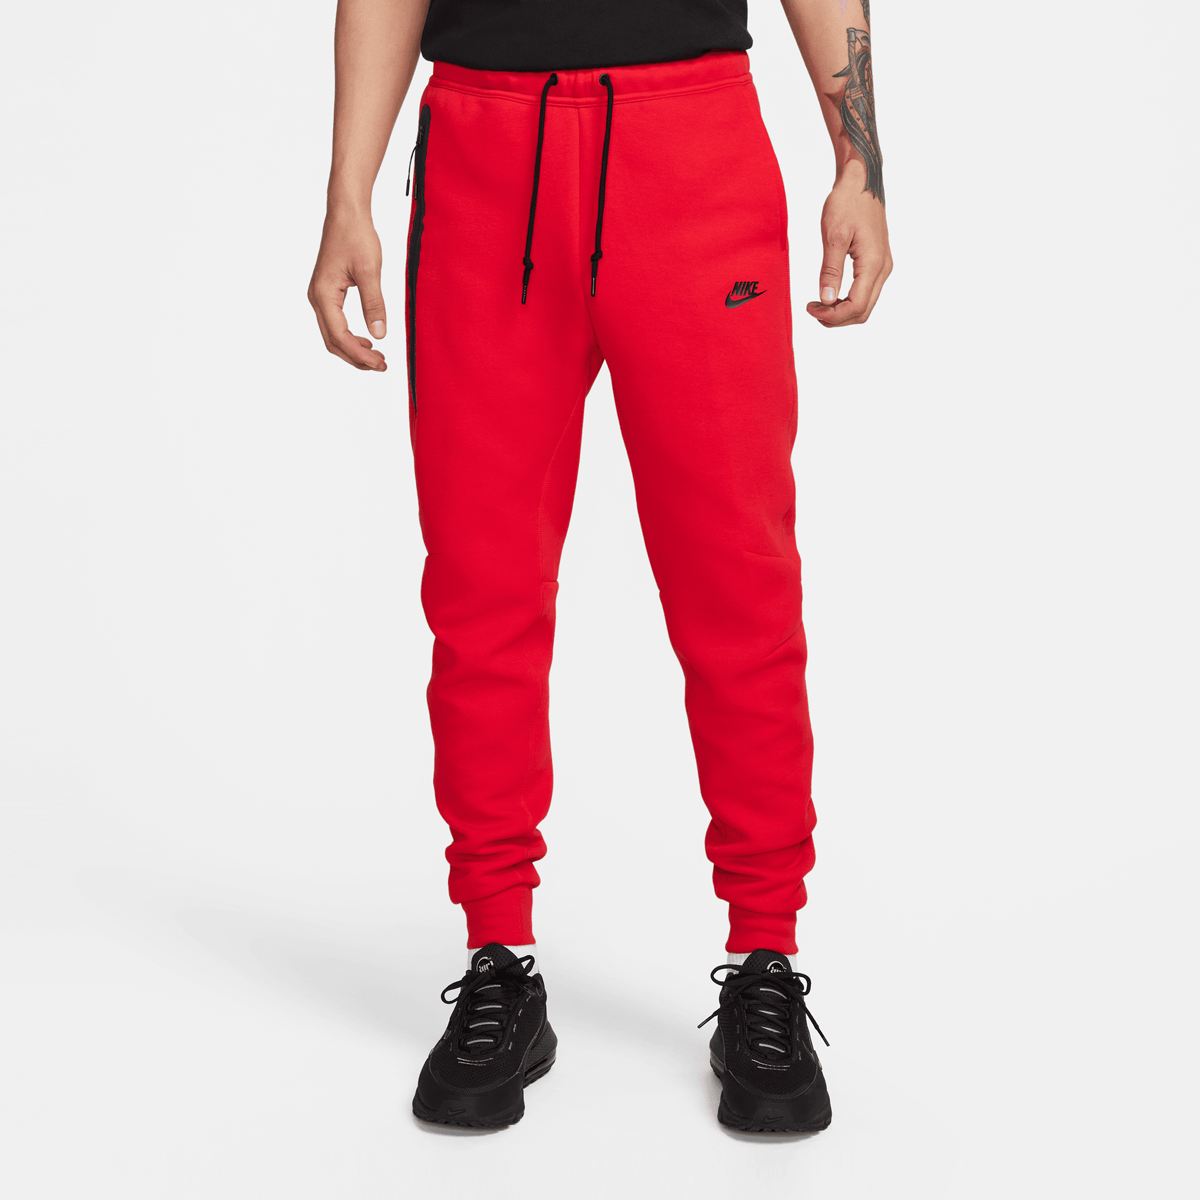 Tech Fleece Jogger, NIKE, Apparel, red/black, taille: L